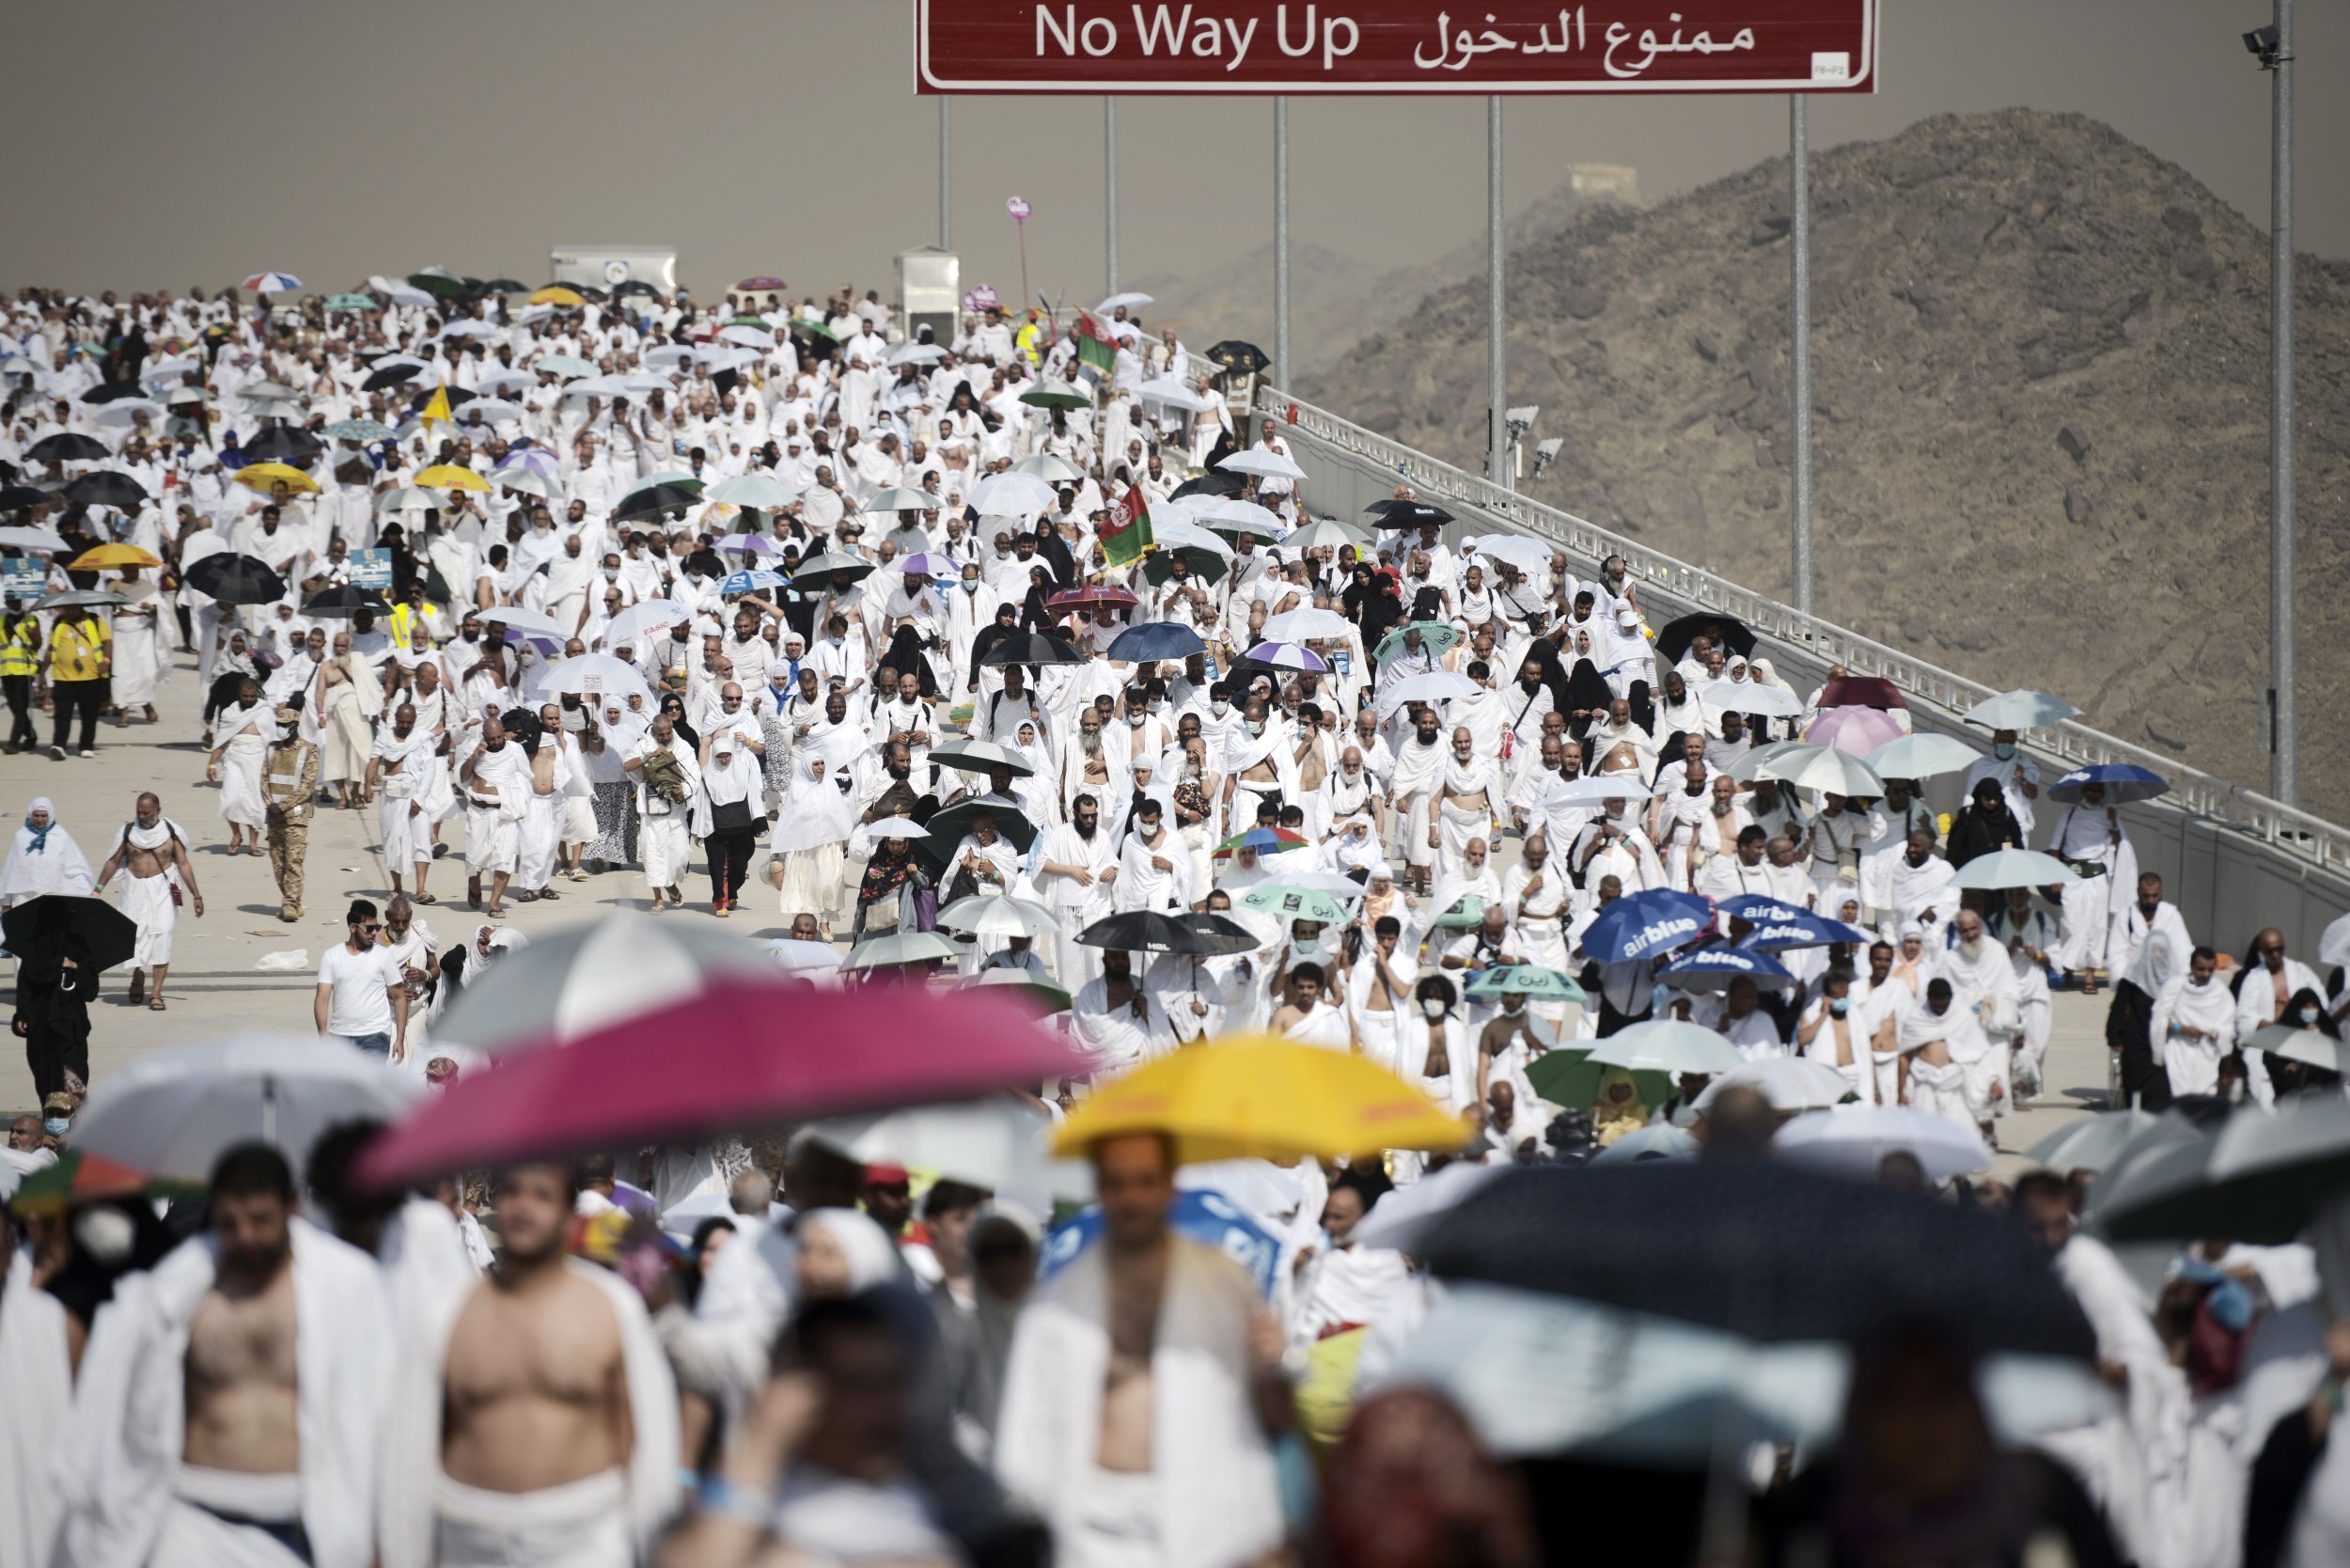 Saudi Arabia Stampede History Deadly Hajj Incident One Of Many Tragedies Across The Globe Ibtimes